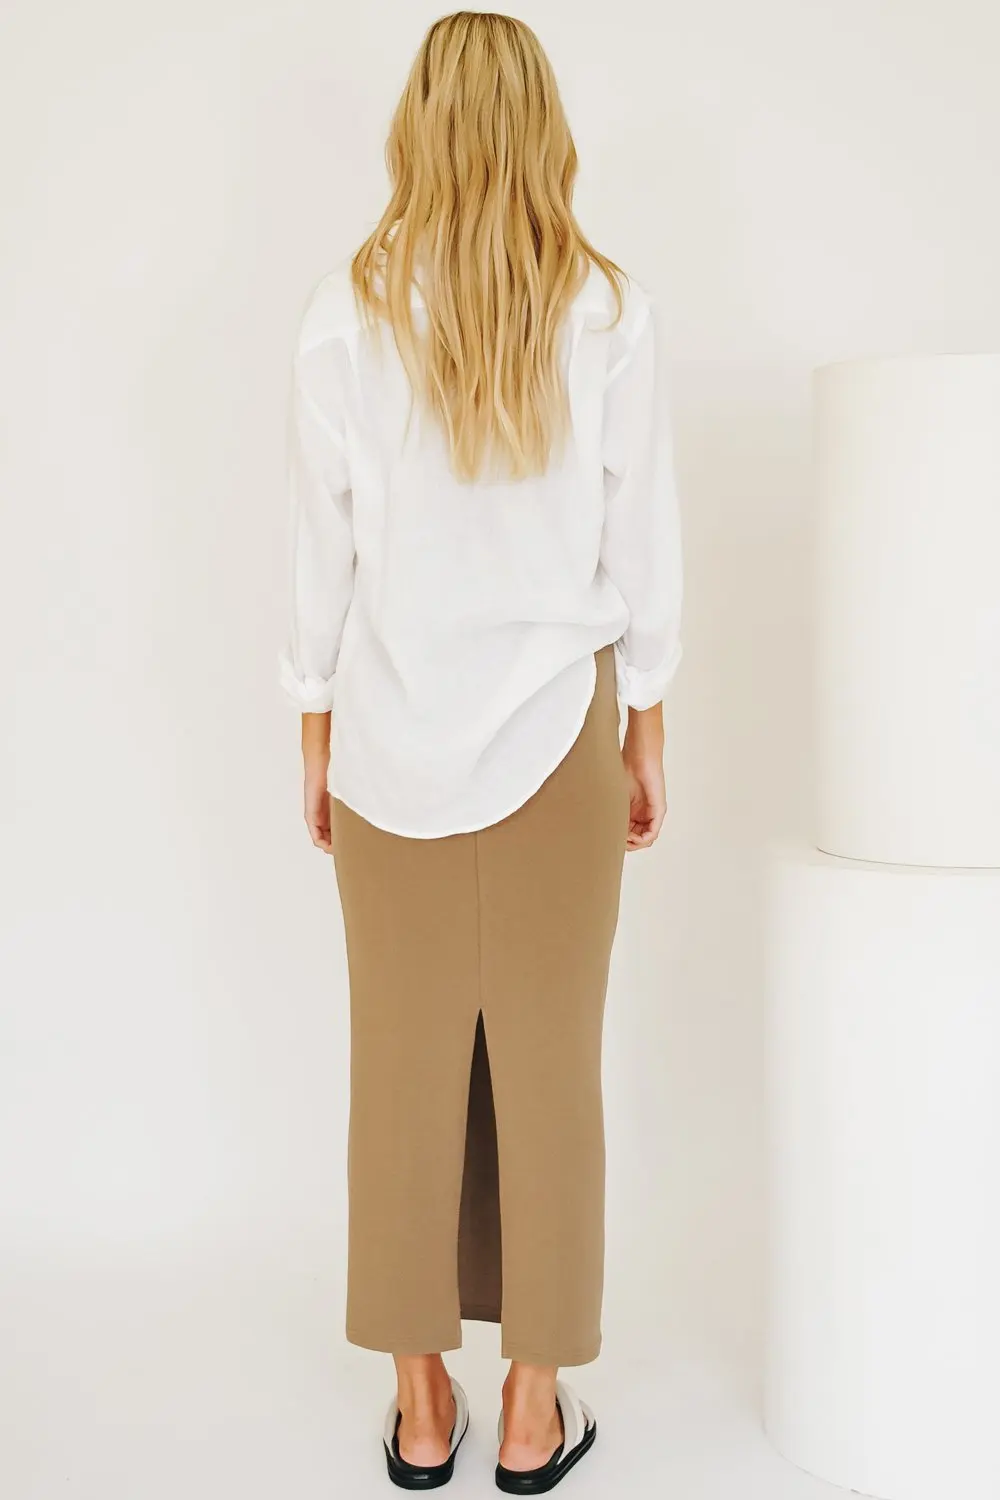 Female Clothing Wholesale Manufacturer Fashion 2021 Knitted Fabric Casual Bottom Split Pencil Elastic Maxi Long Clothing Skirt